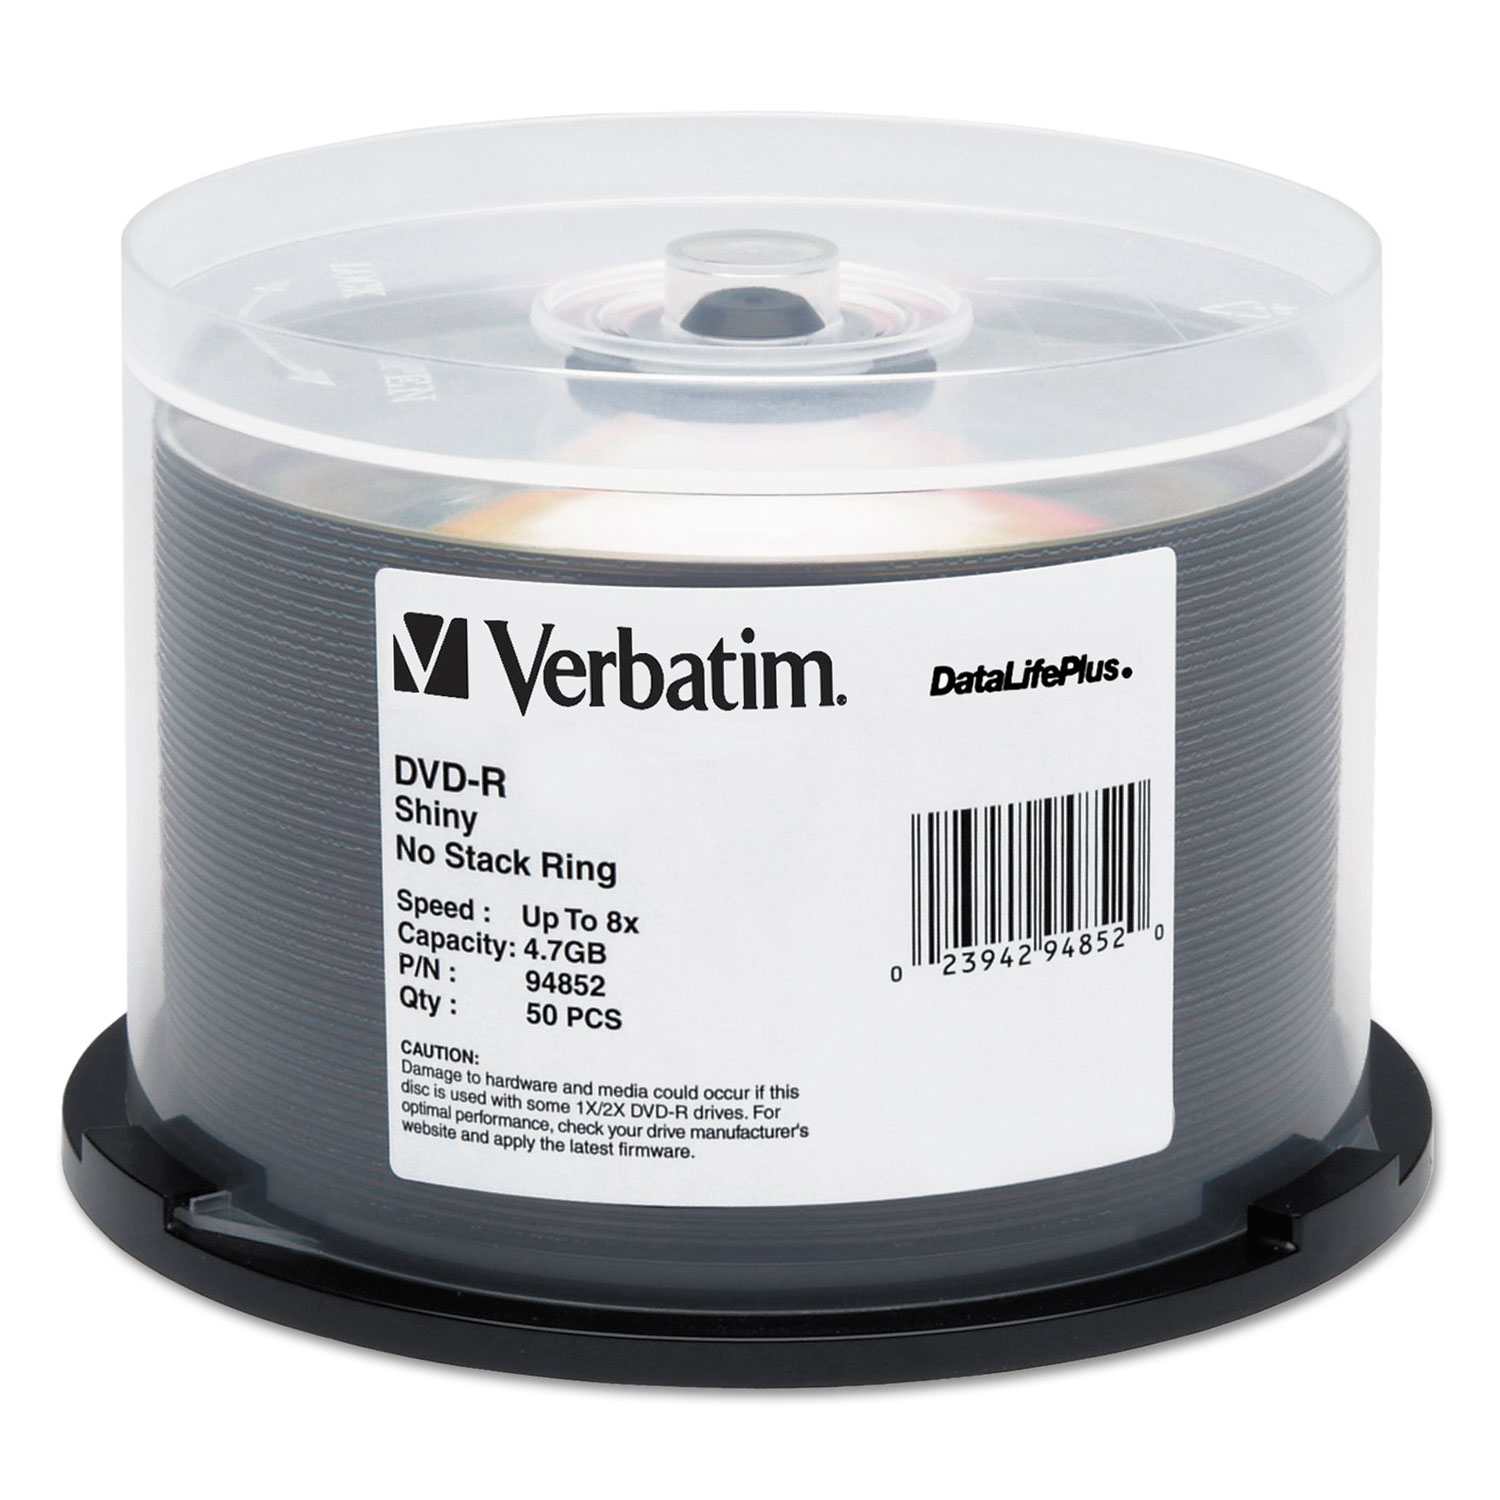  Verbatim 94852 DataLifePlus DVD-R, 4.7GB, 8X, Shiny Silver Silk Screen Printable, 50/PK Spindle (VER94852) 